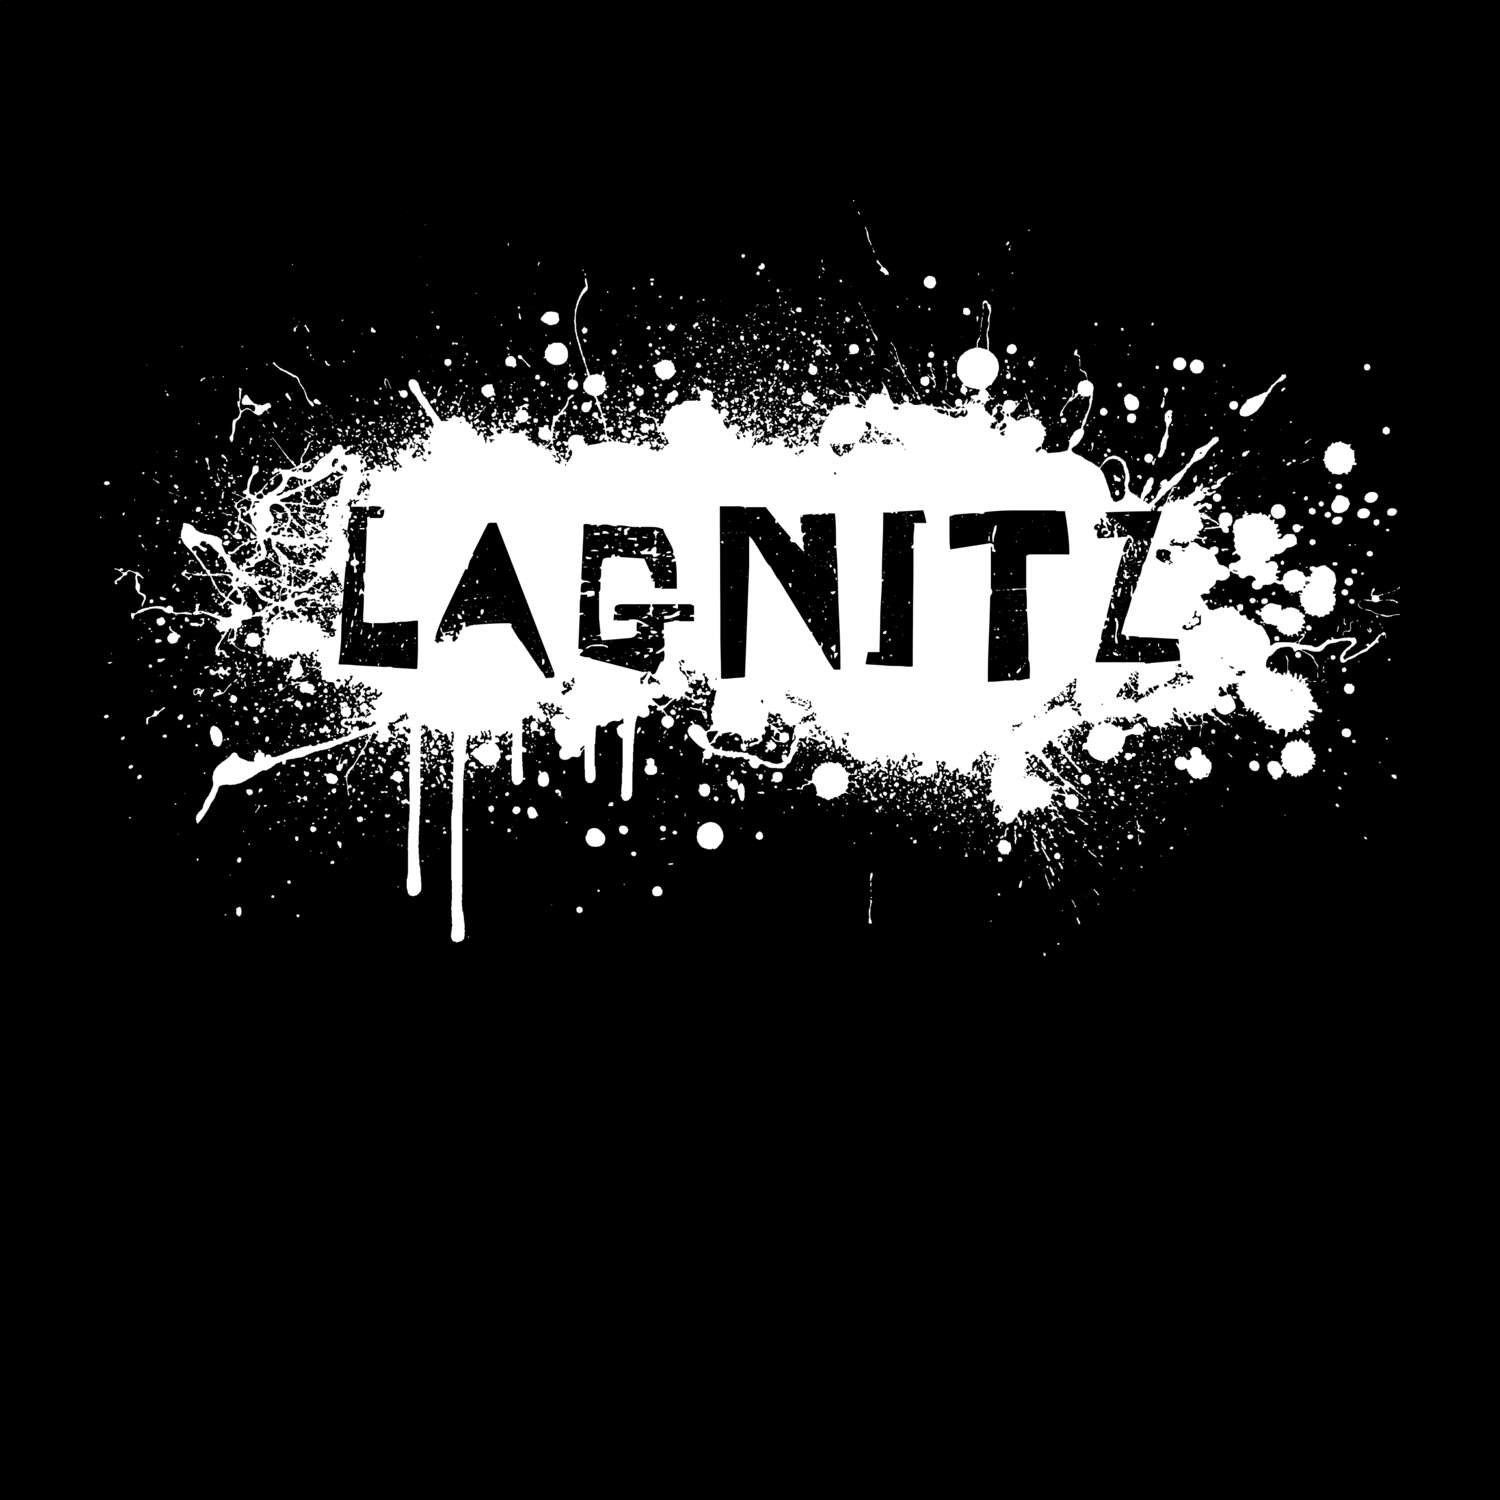 Lagnitz T-Shirt »Paint Splash Punk«